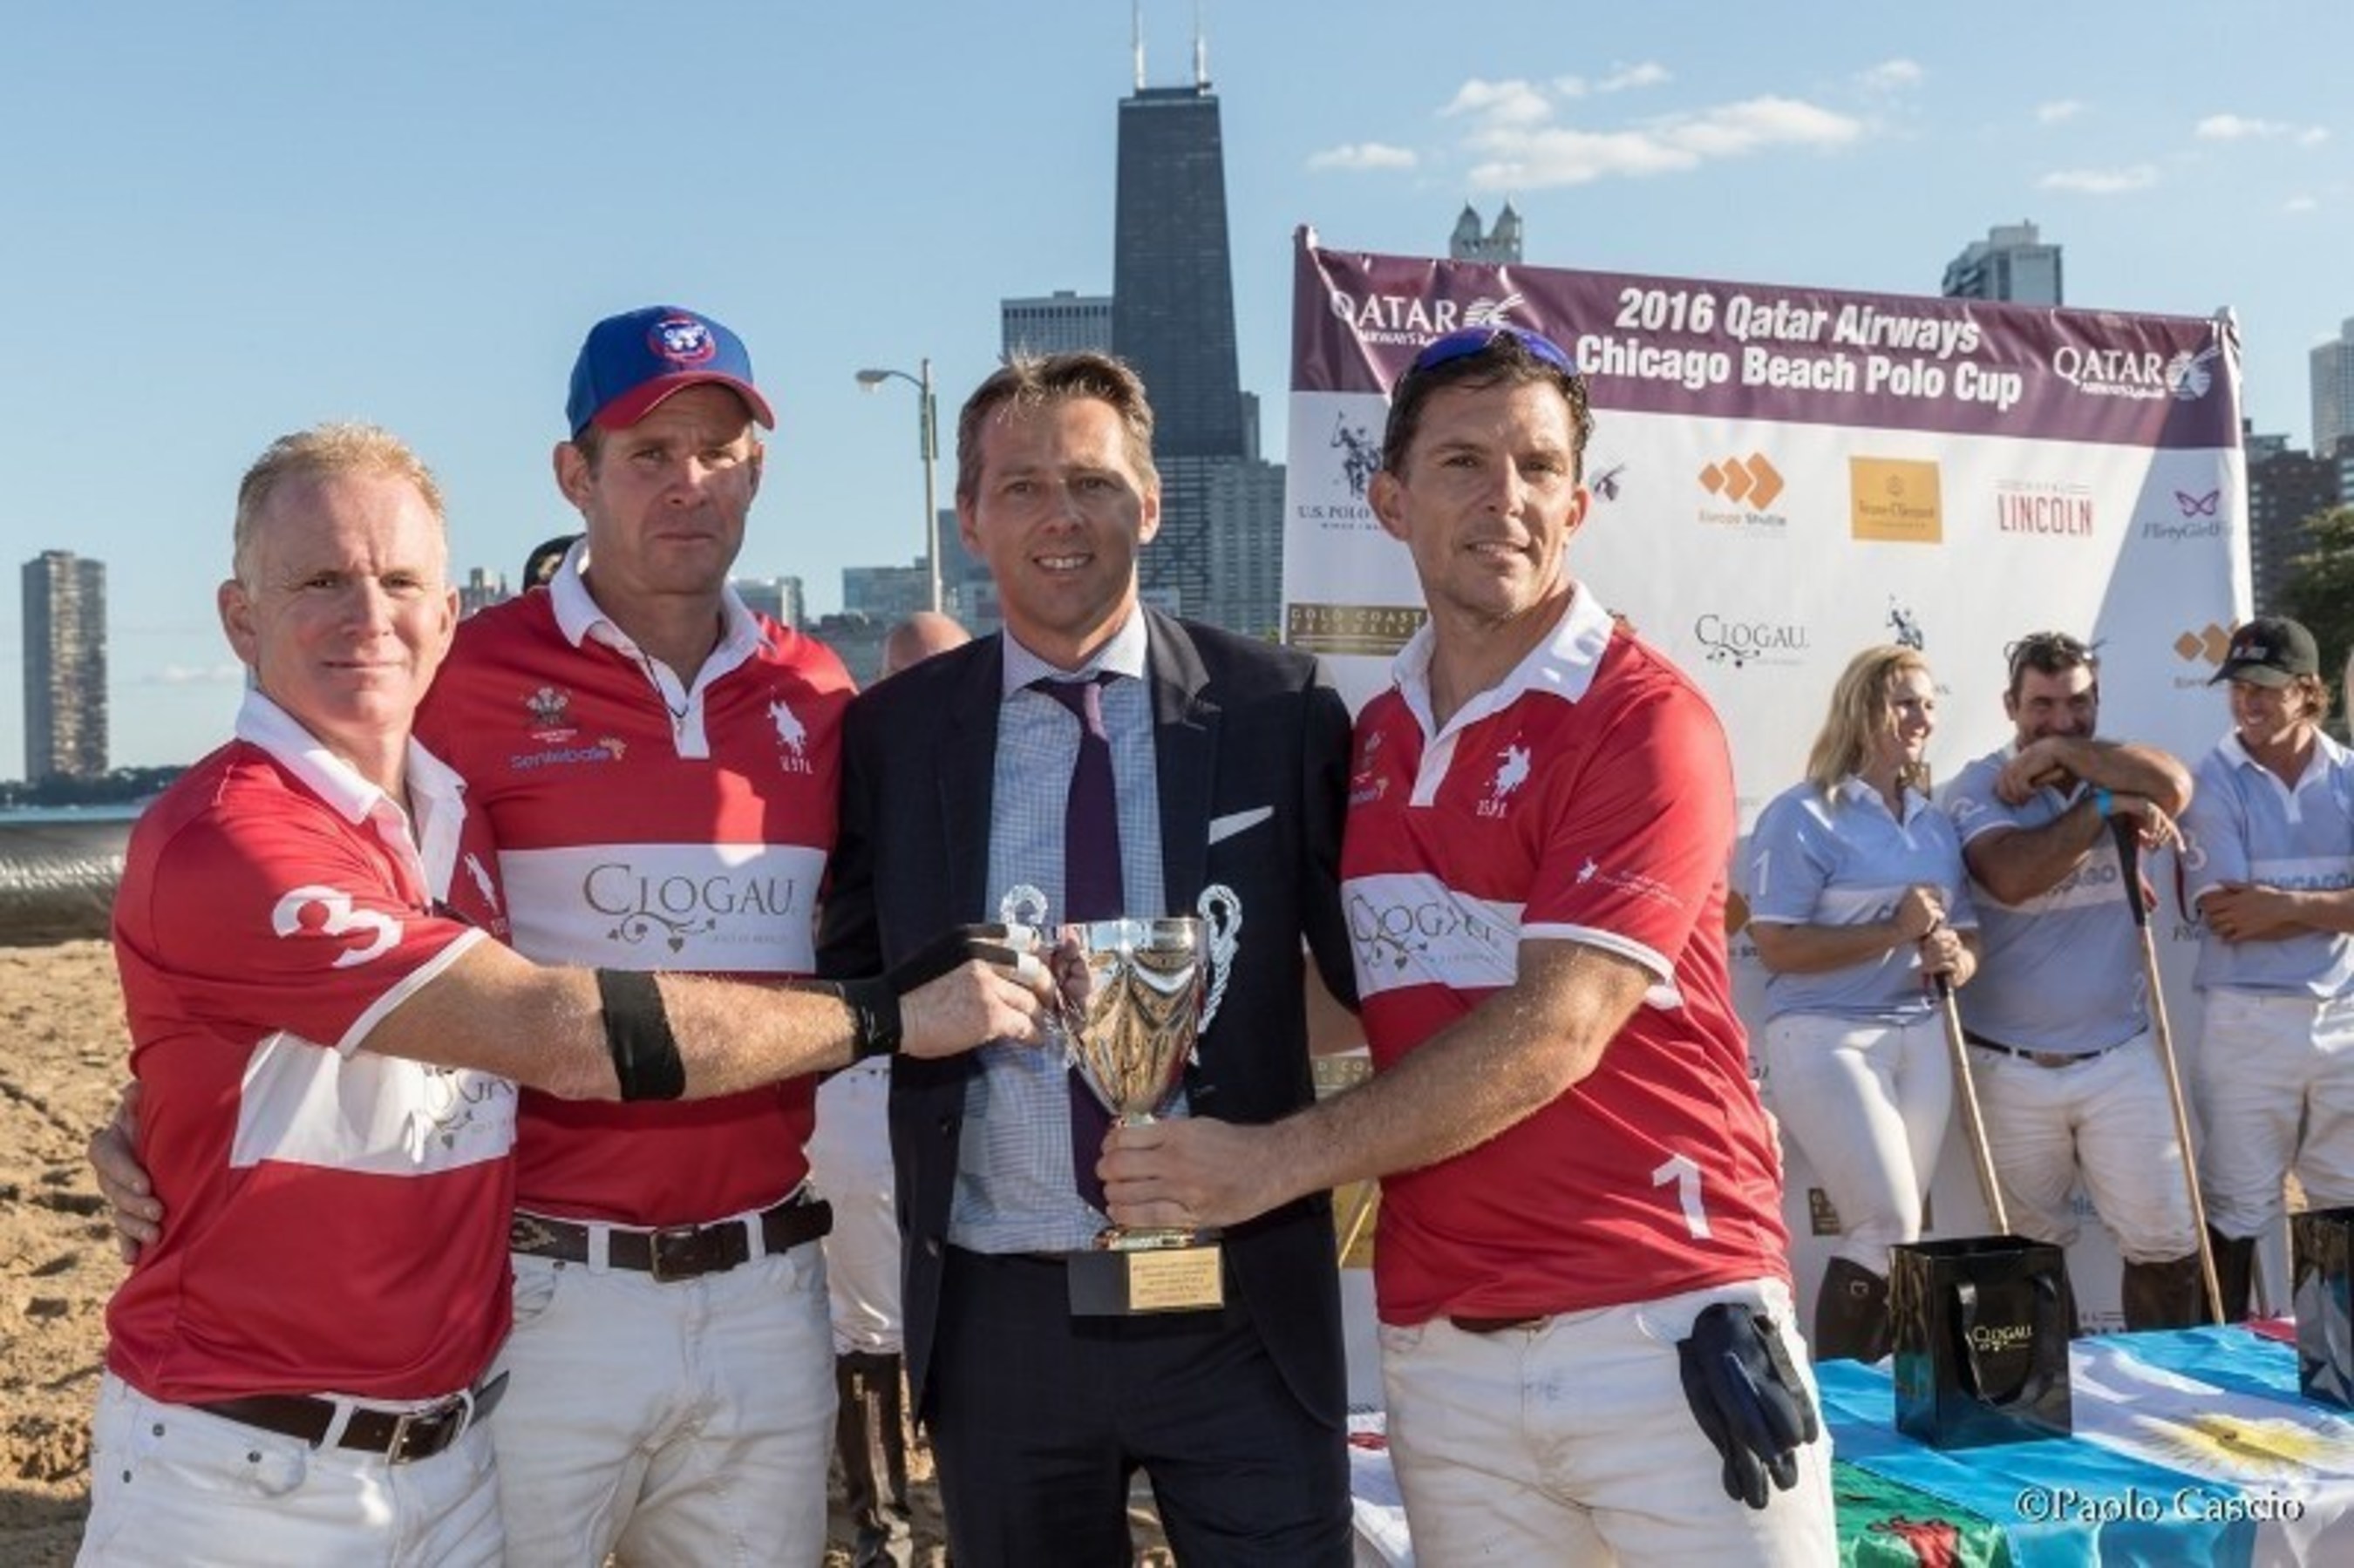 Mr. Gunter Saurwein, Qatar Airways' VP of Americas, congratulates the winners of the Chicago Beach Polo Cup, the Royal Wales Polo Team.